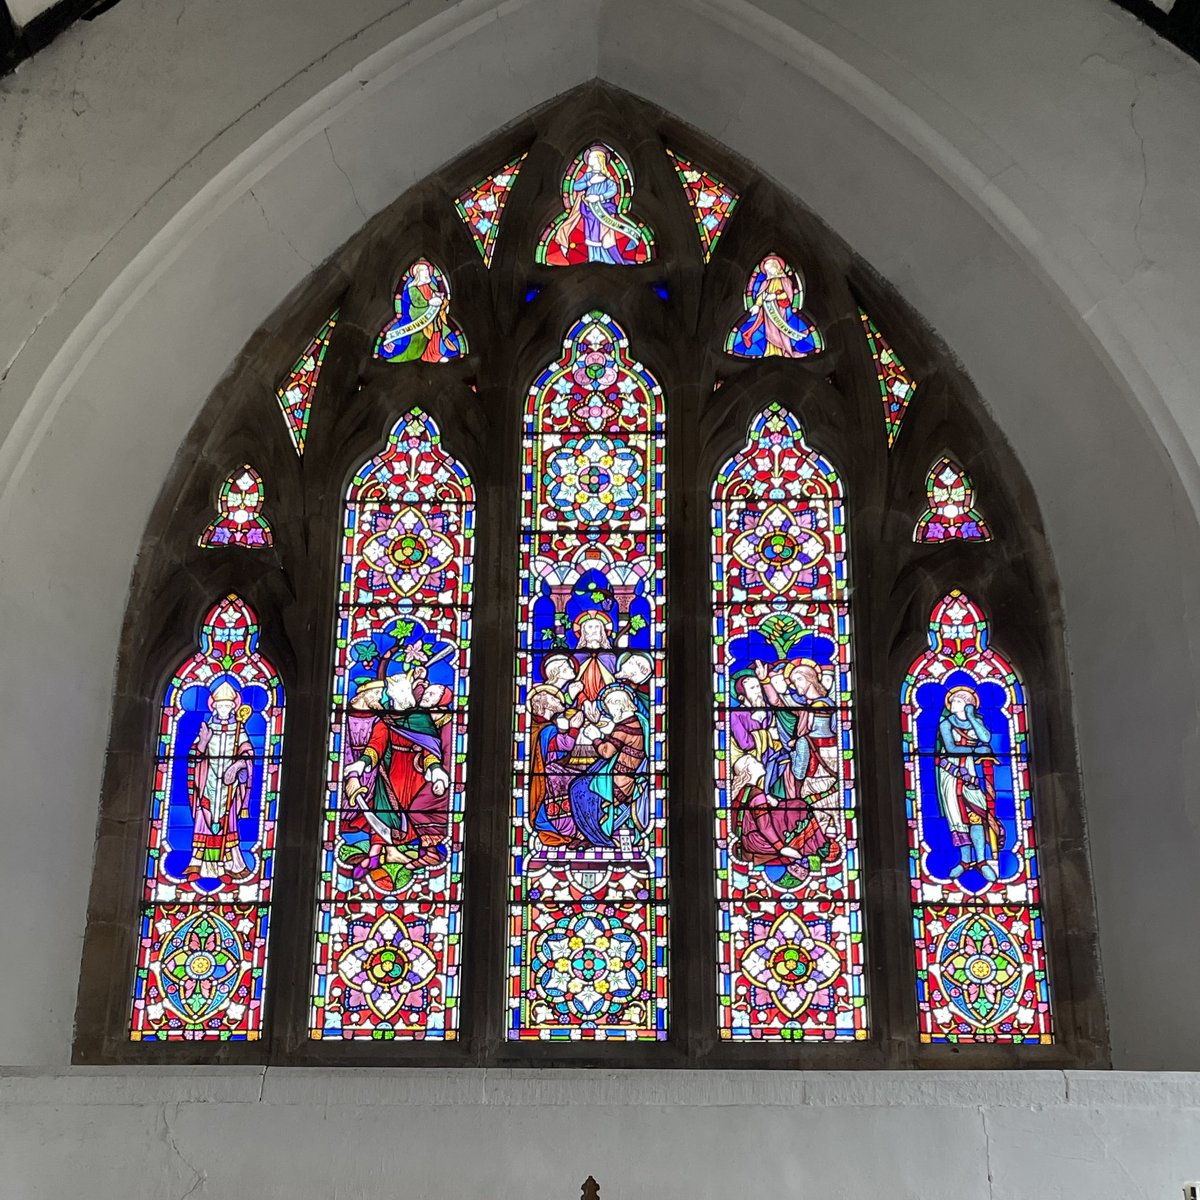 Vibrant colours for  #StainedglassSunday in east window St George’s Church Modbury, Devon

#window #stainedglass